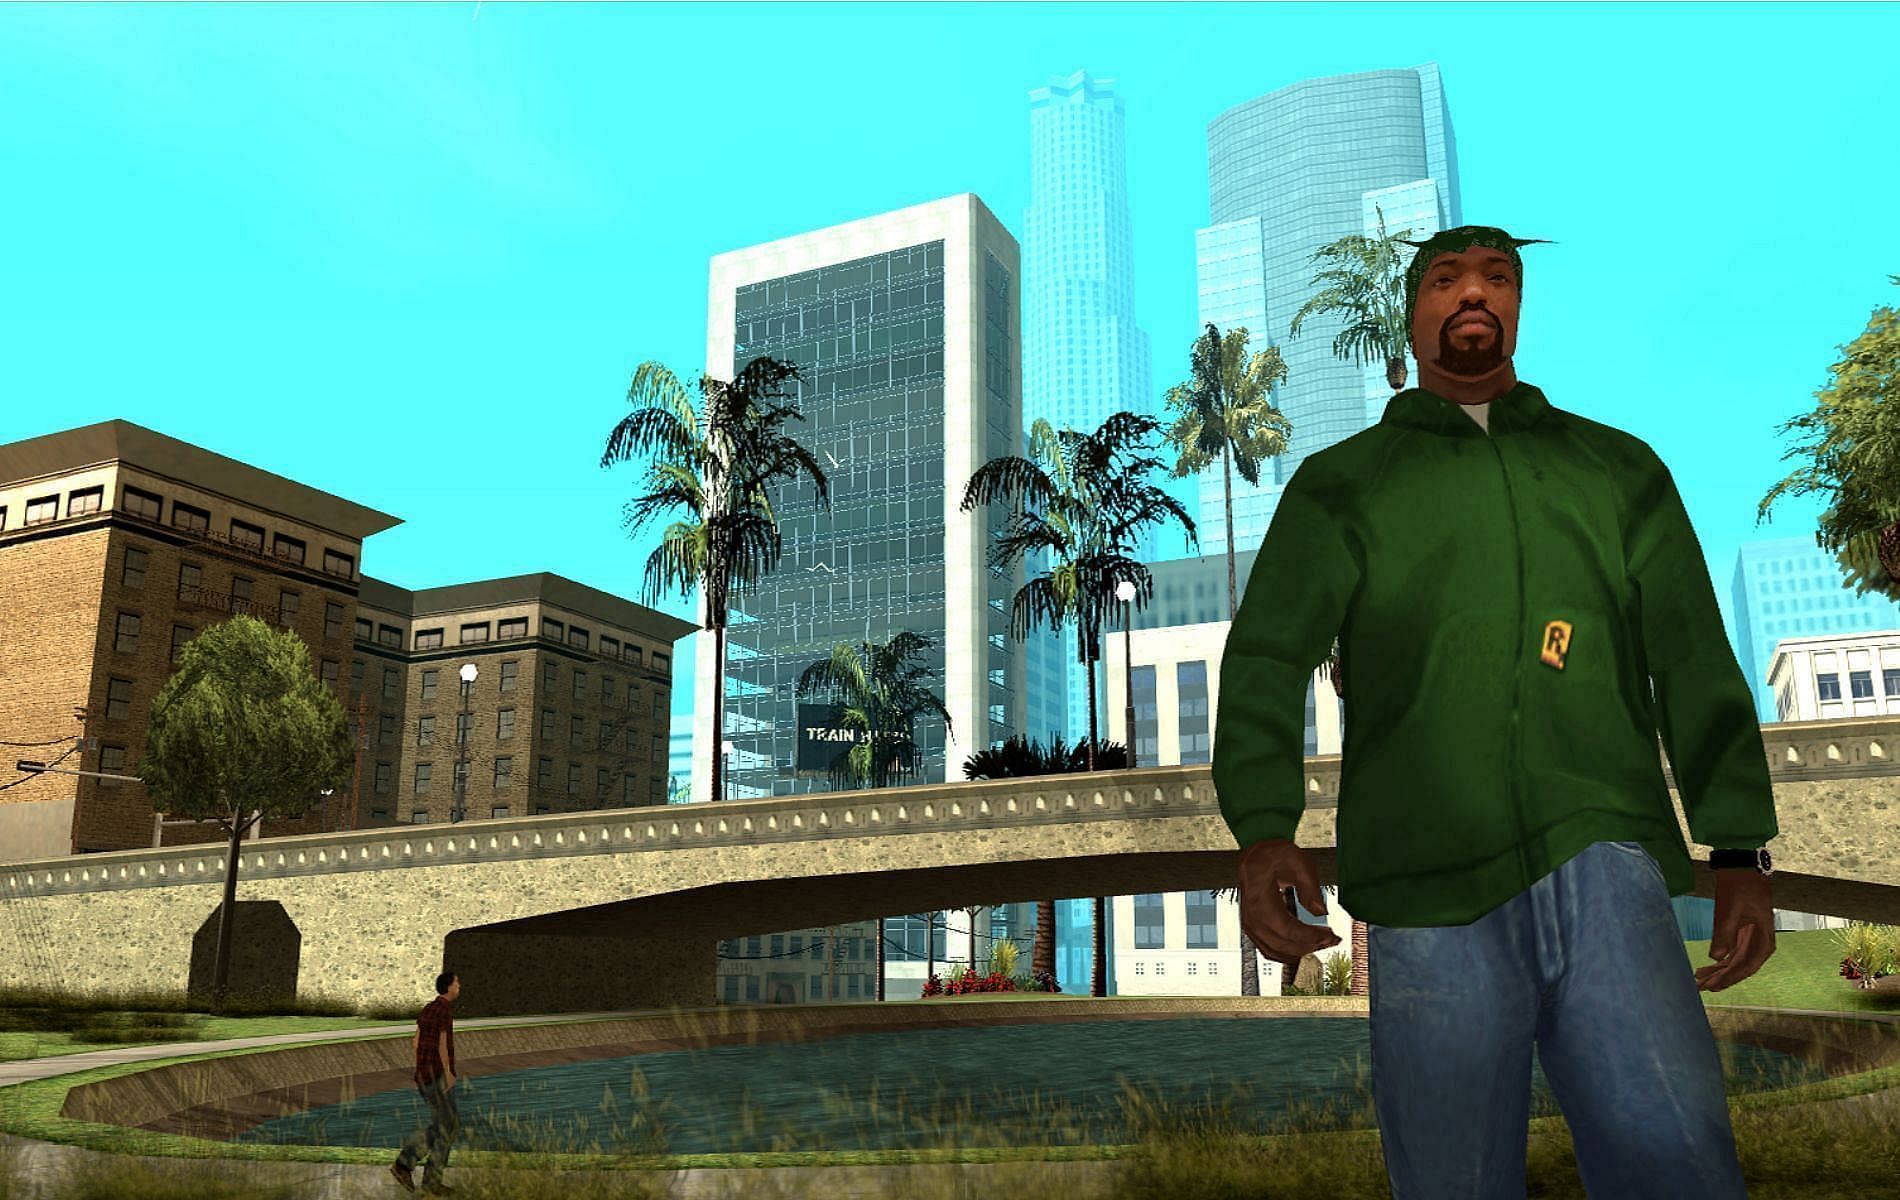 19 years ago GTA San Andreas was released : r/GTA